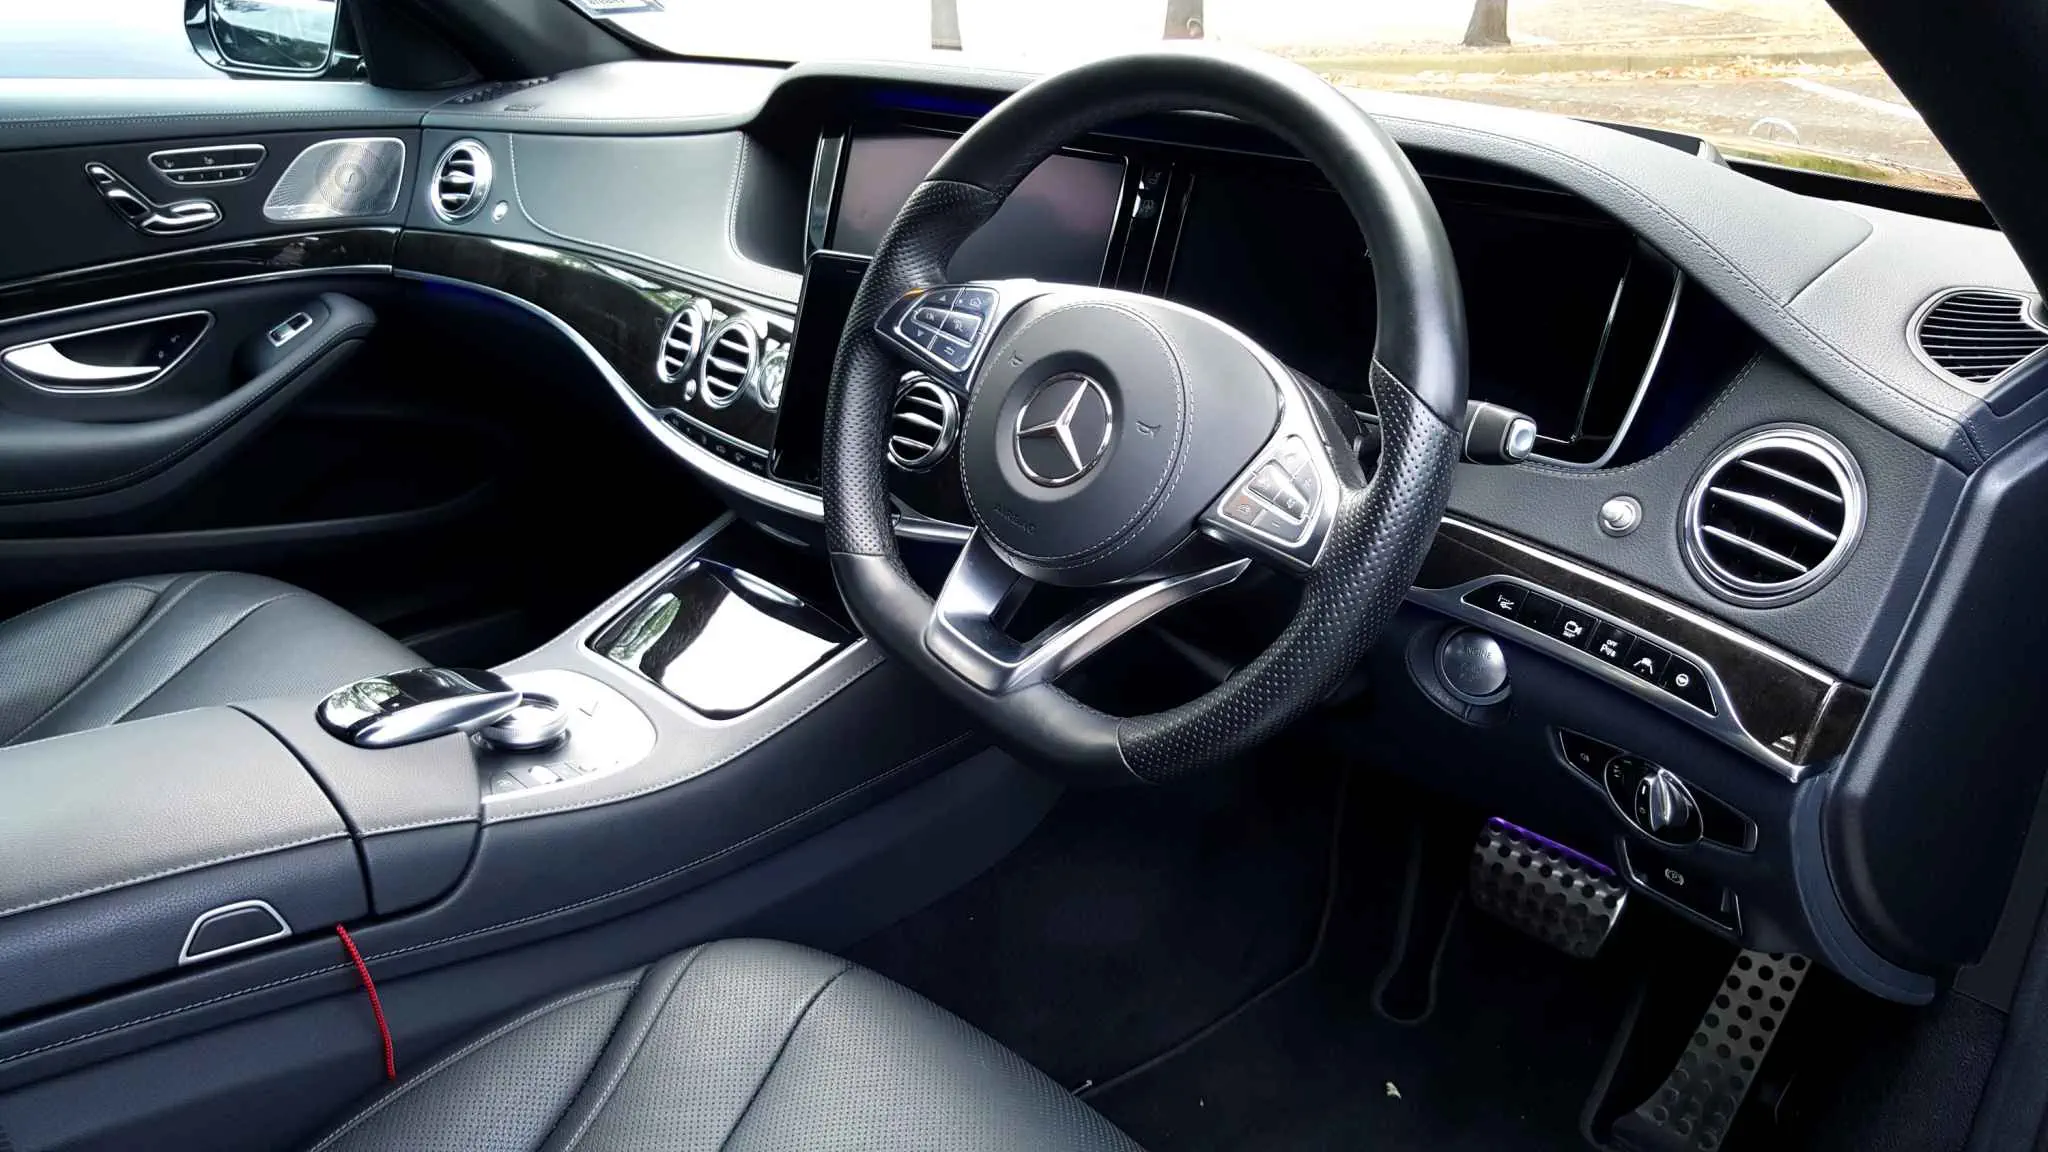 Mercedes front interior